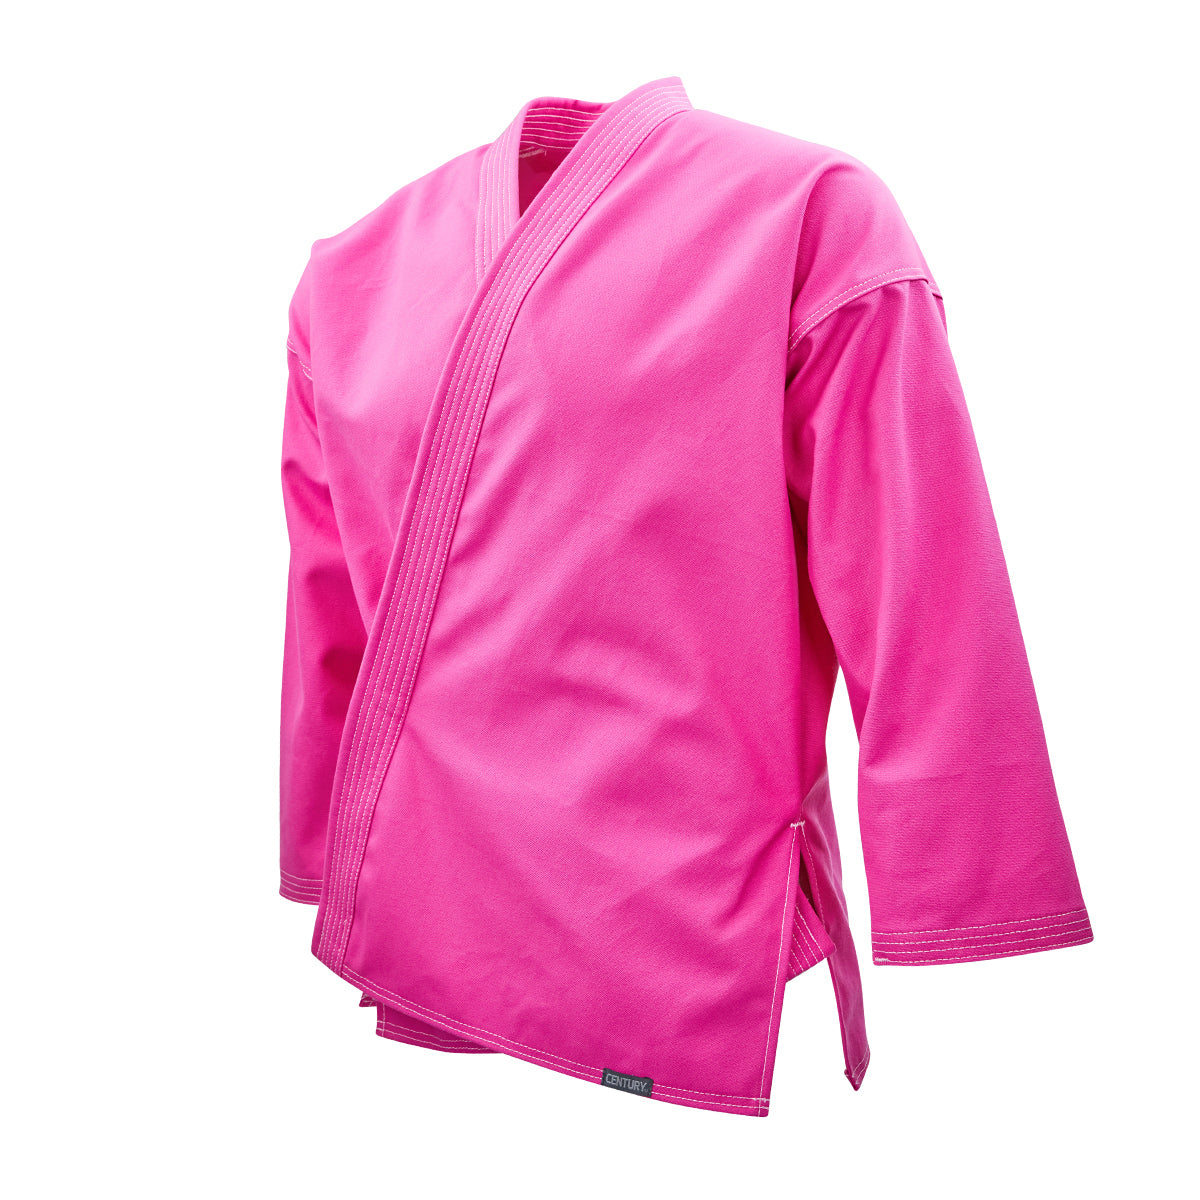 Pink Traditional Uniform Top